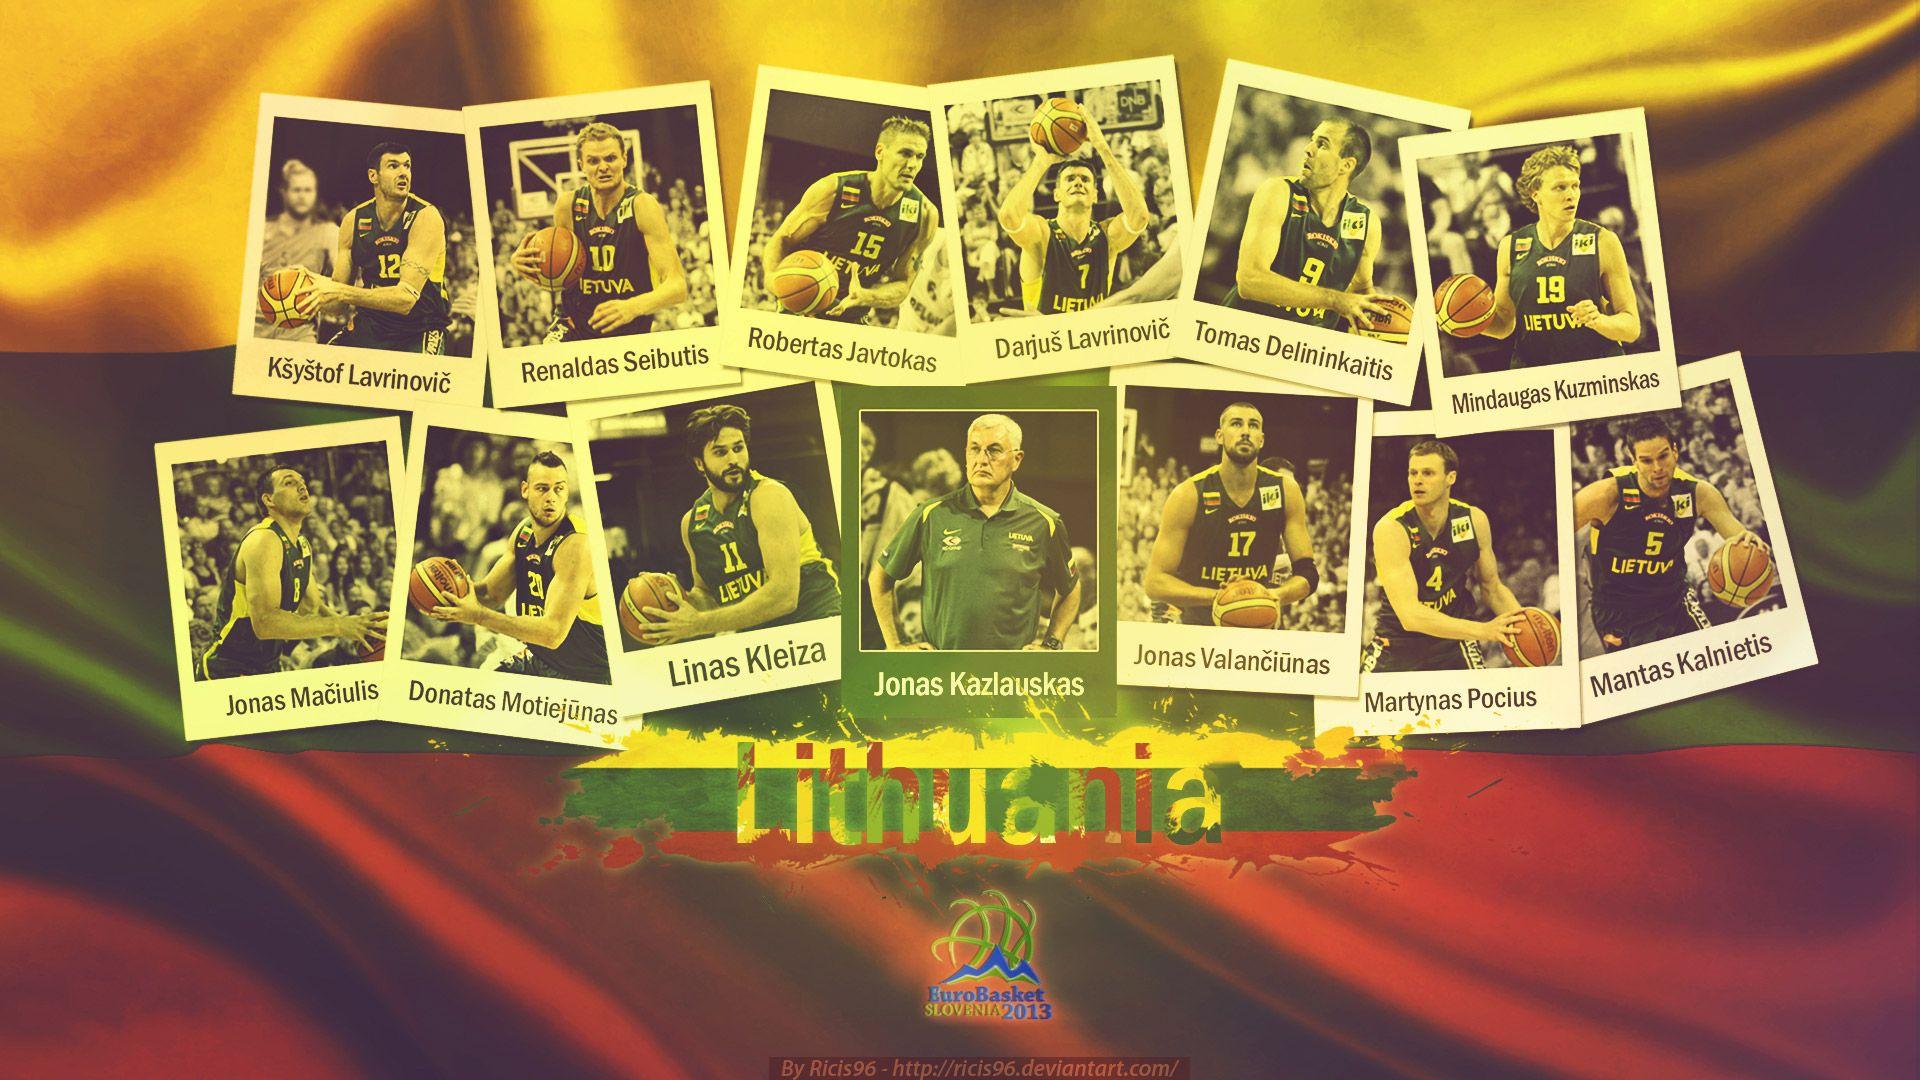 Lithuania Basketball Wallpaper. Basketball Wallpaper at